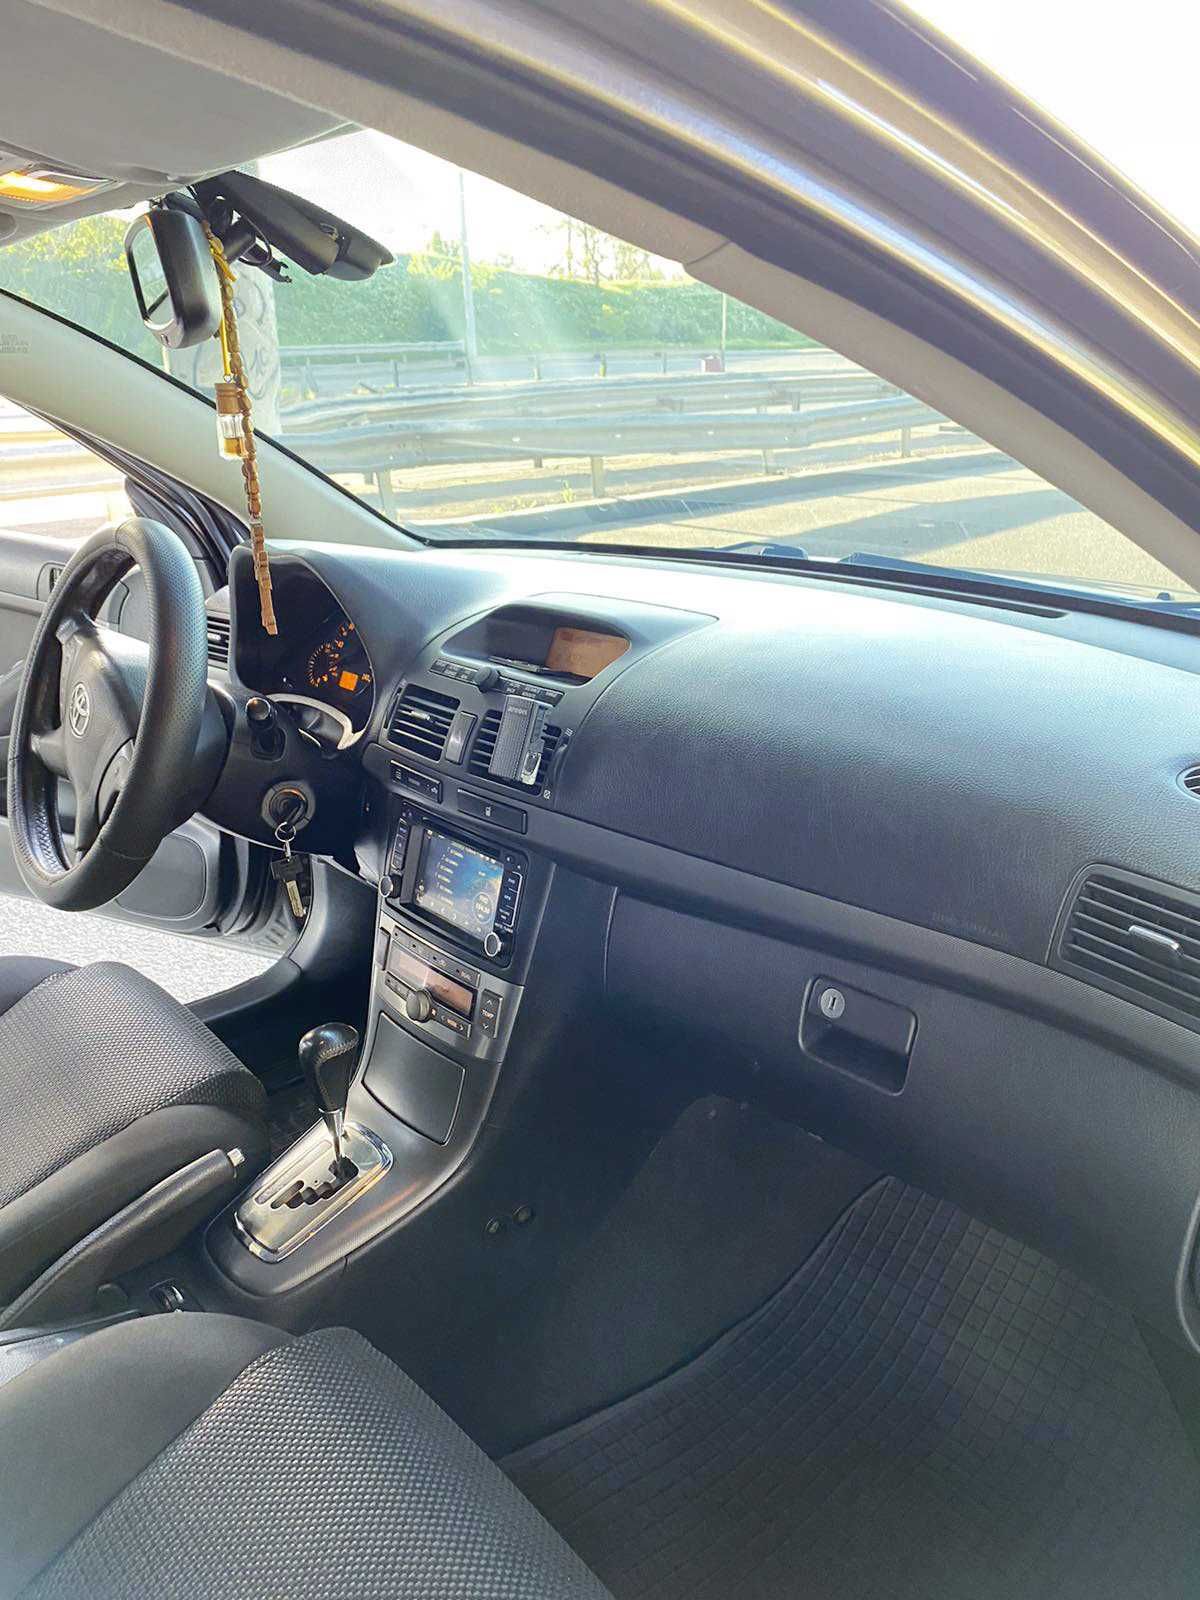 Toyota Avensis 1.8 Автомат 2003 год (В ИДЕАЛЕ)